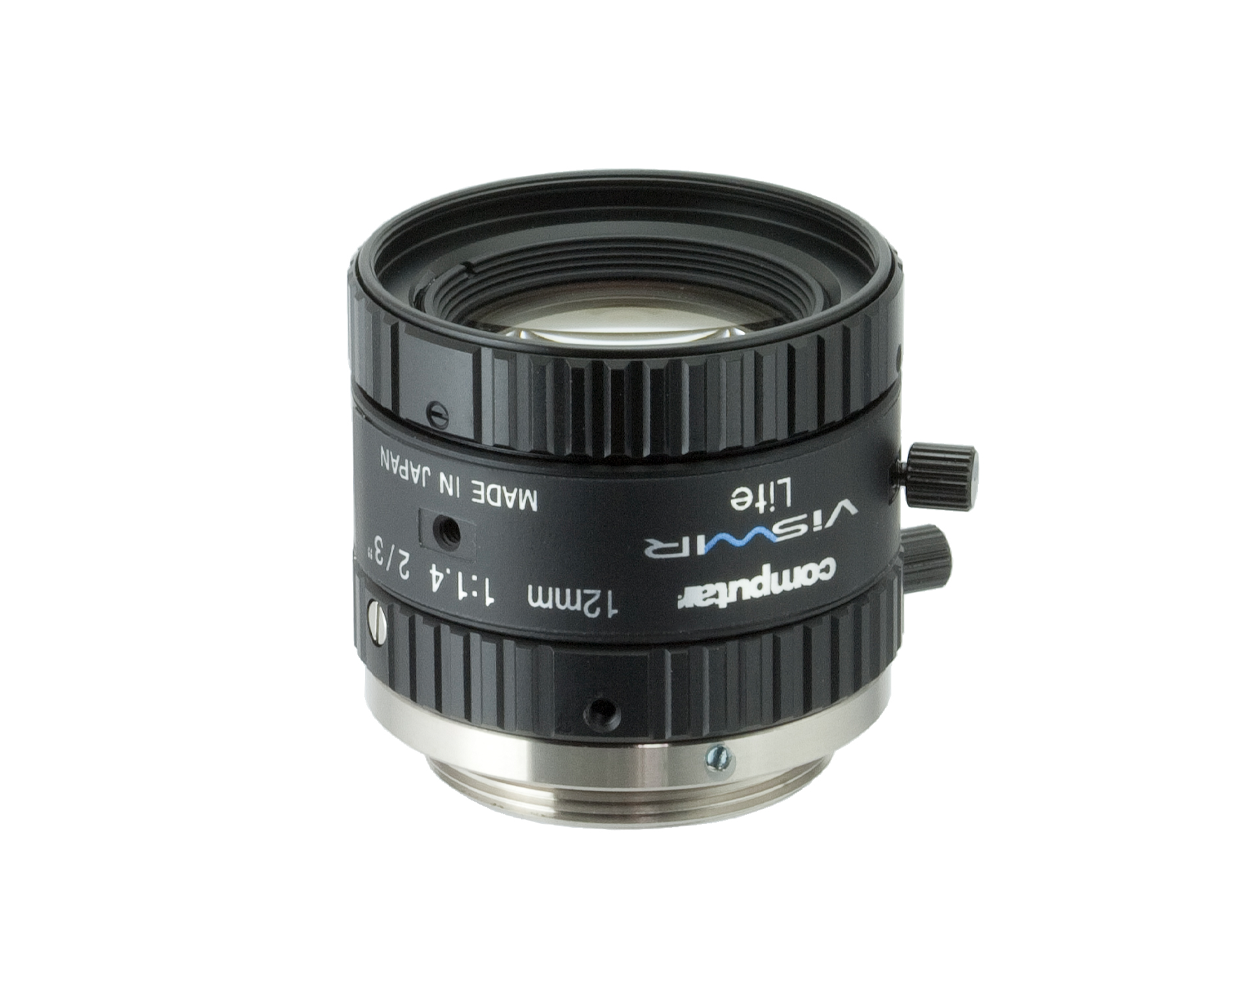 Ống kính - Lens camera Computar M1214-VSW